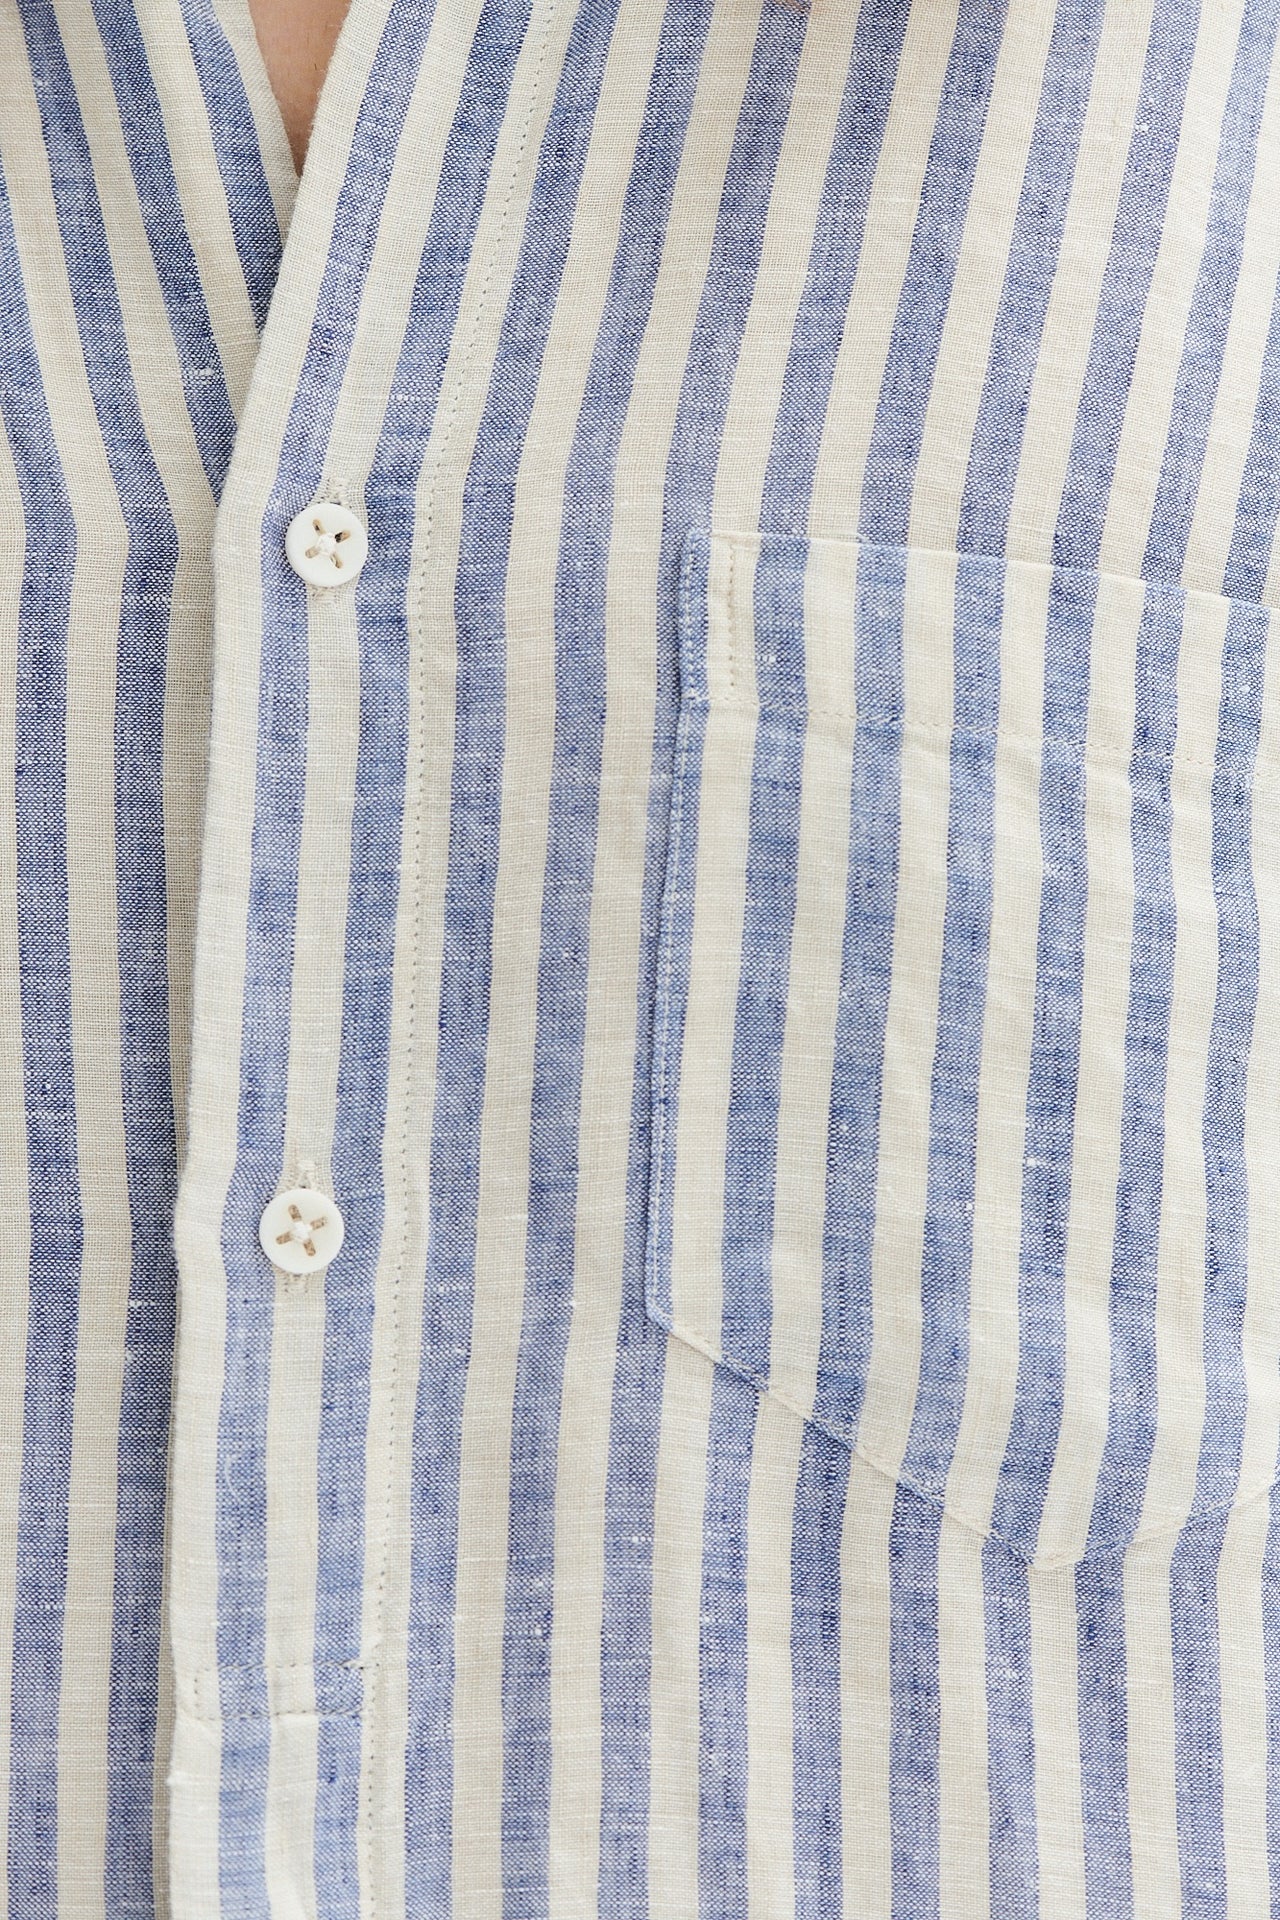 Zen Grandad Collar Shirt in a Creamy White and Blue Organic Italian Linen